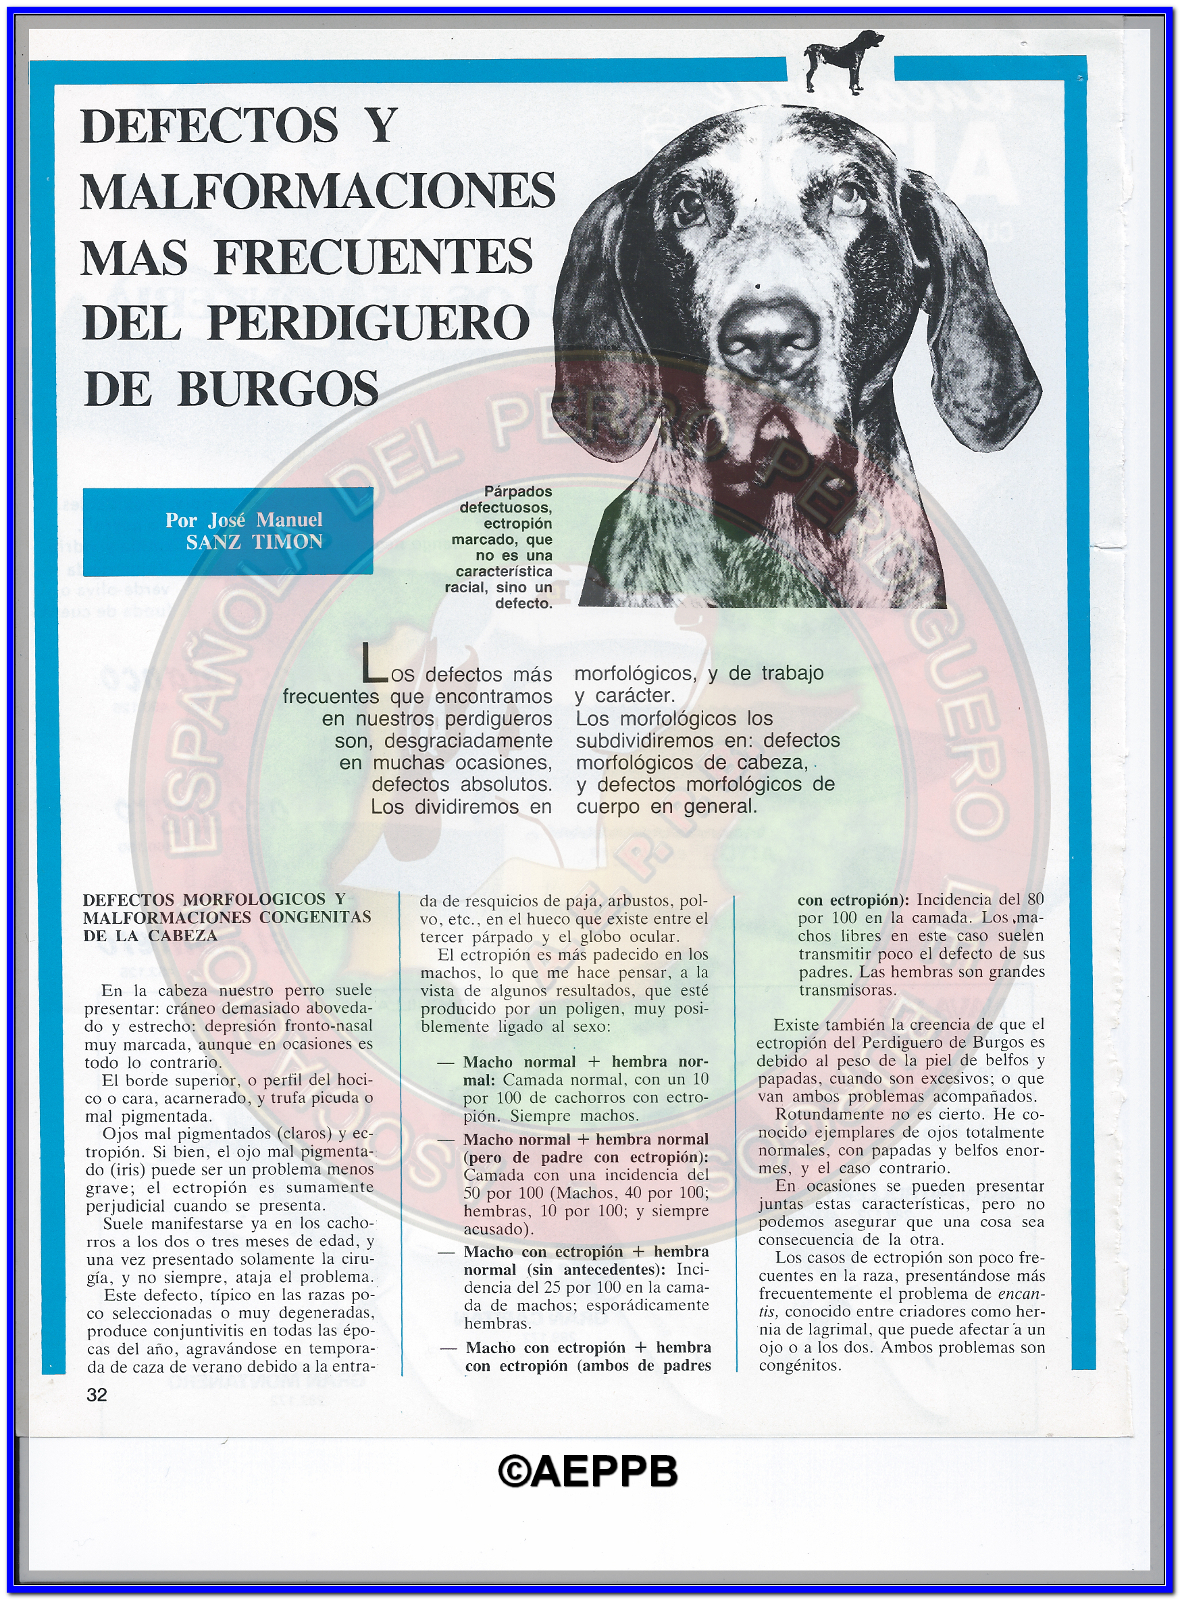 AEPPB PERDIGUERO DE BURGOS1 1180